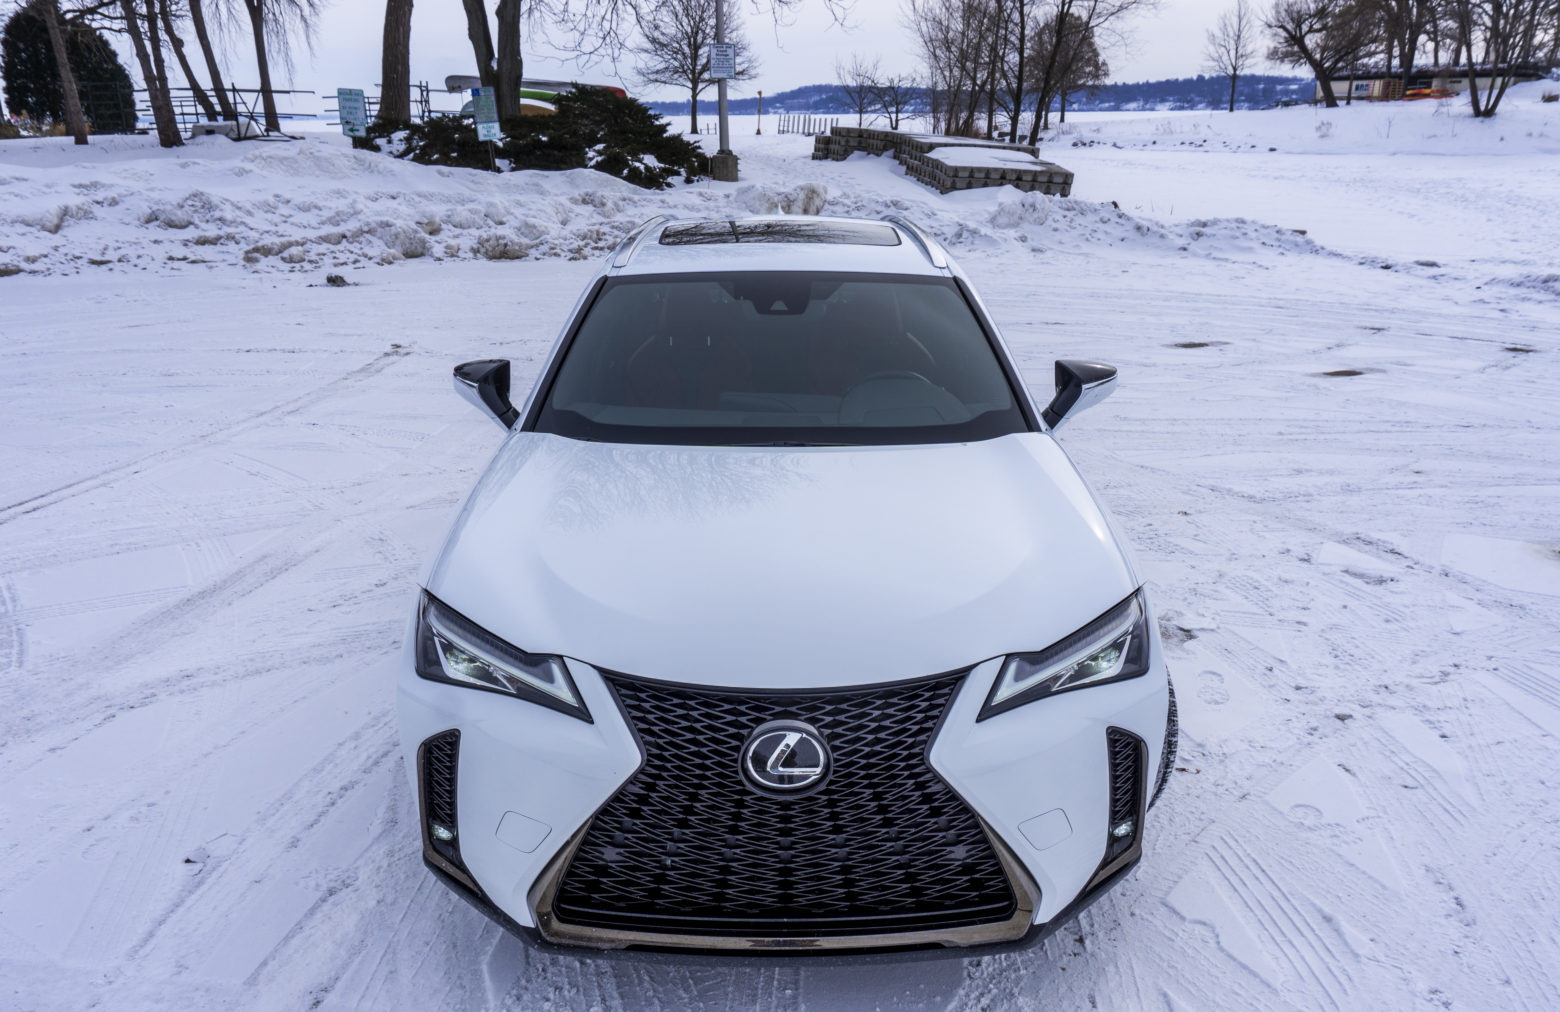 Driven Lexus UX 200 F Sport, snow days are no problem